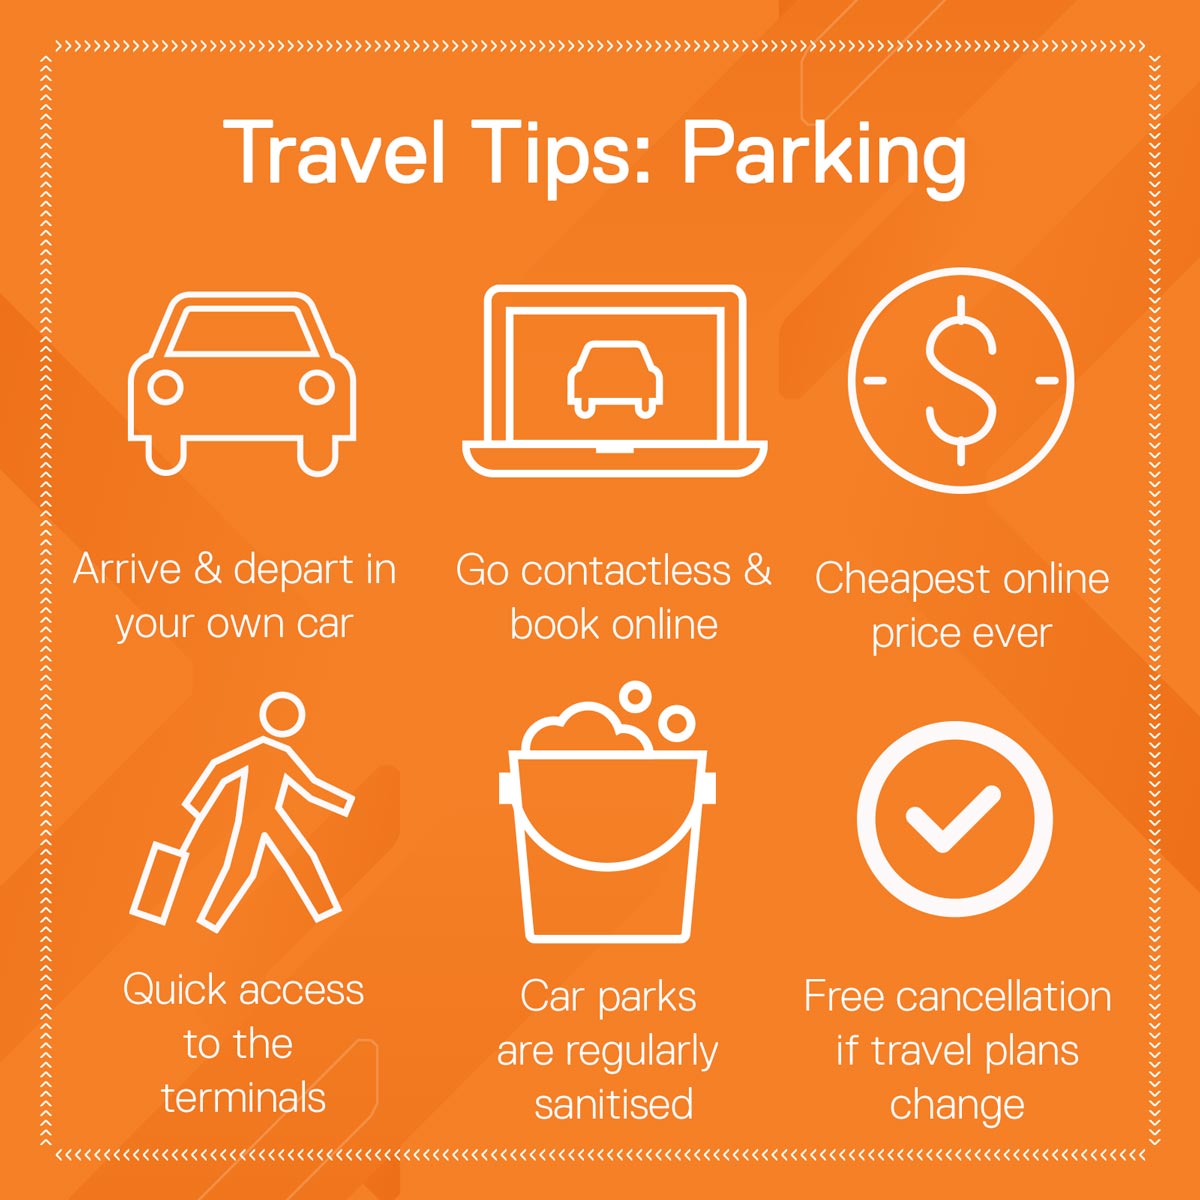 COVID Safe Travels: Parking Tips